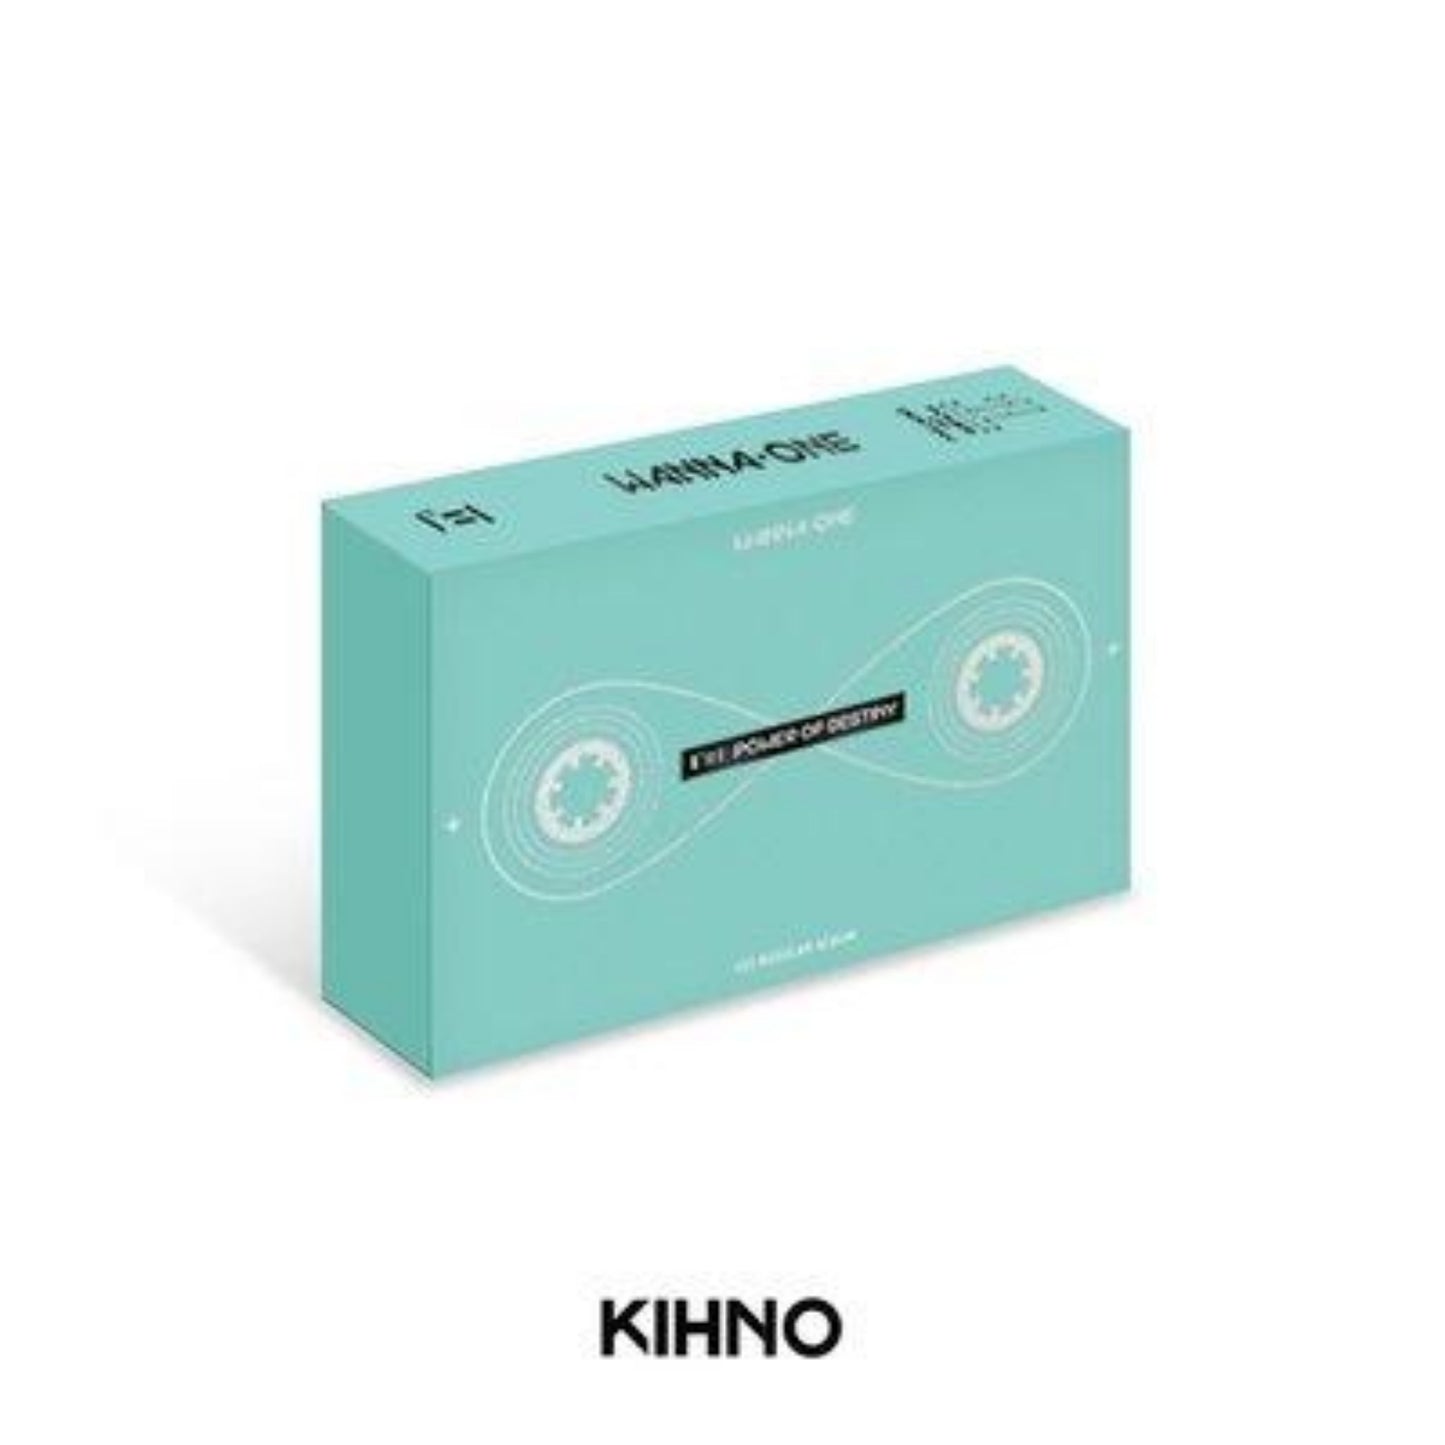 (One)[ Kihno Version] WANNA ONE - 1st album Kihno album :11 POWER OF DESTINY(